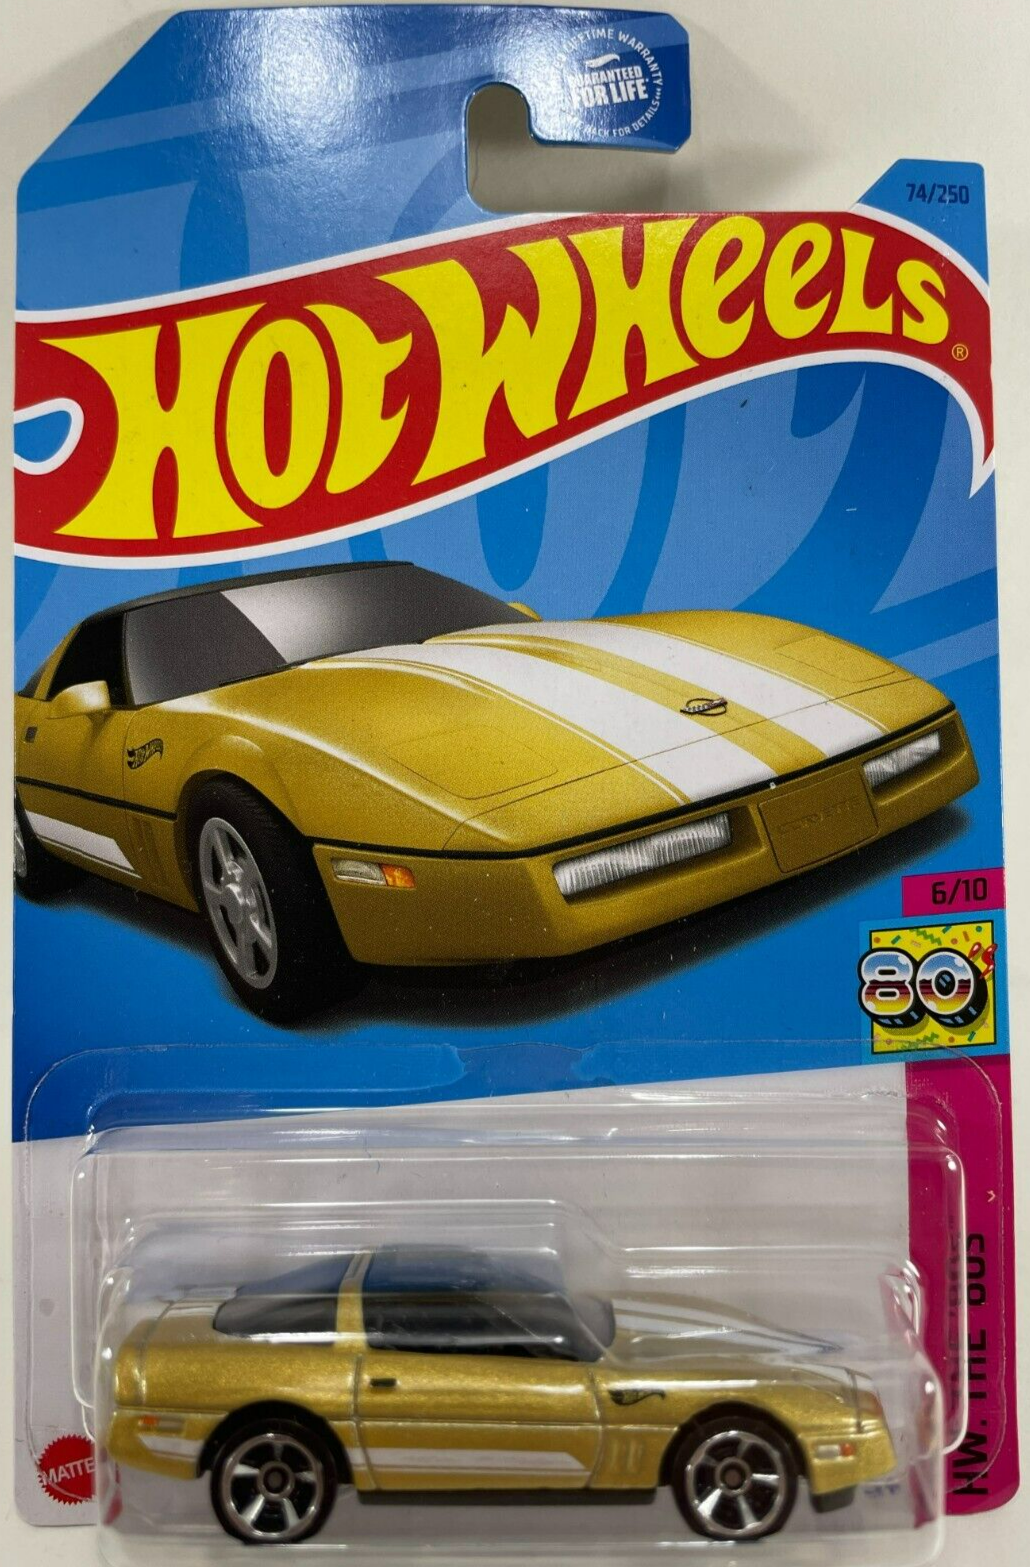 Hot Wheels - '84 Corvette - Scale 1:64 - Gold - $10.95